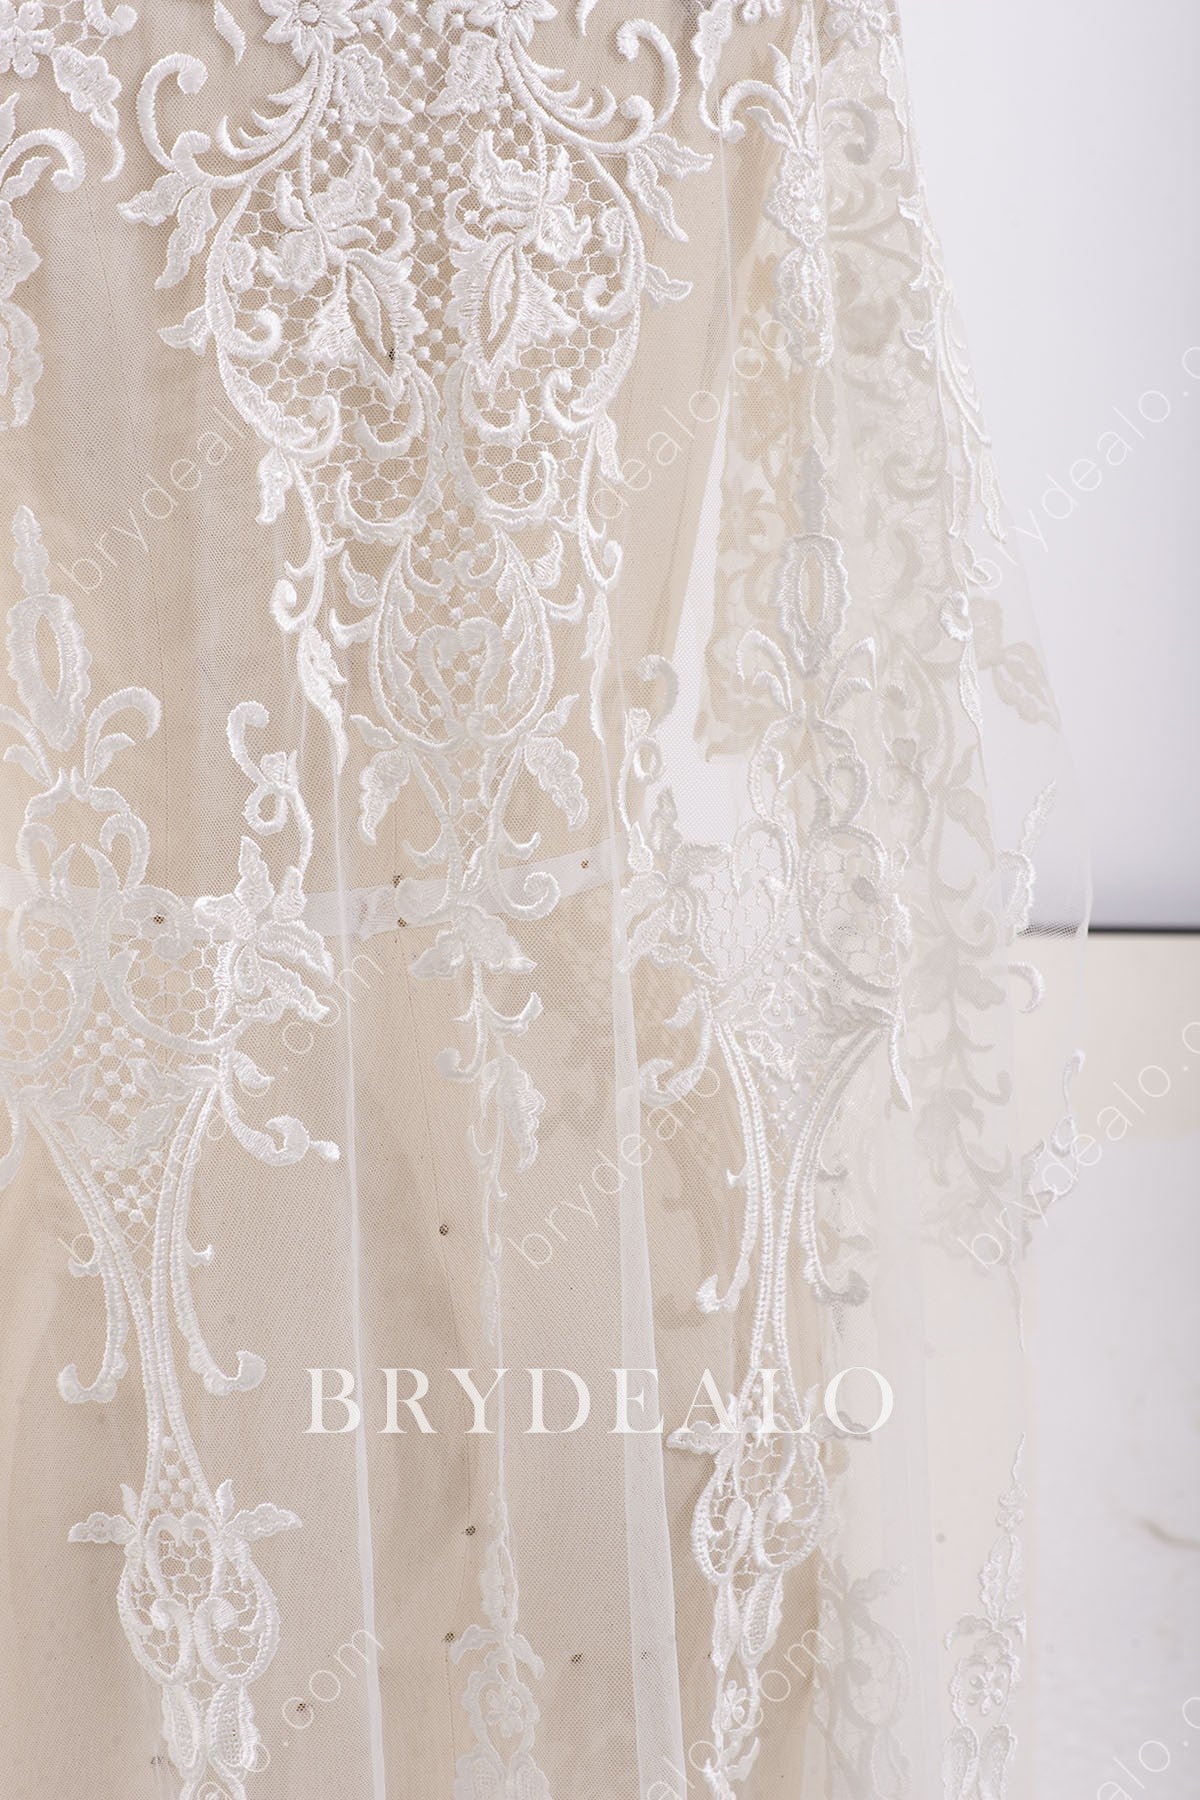 Wholesale Beautiful Flower Cording Bridal Lace Fabric